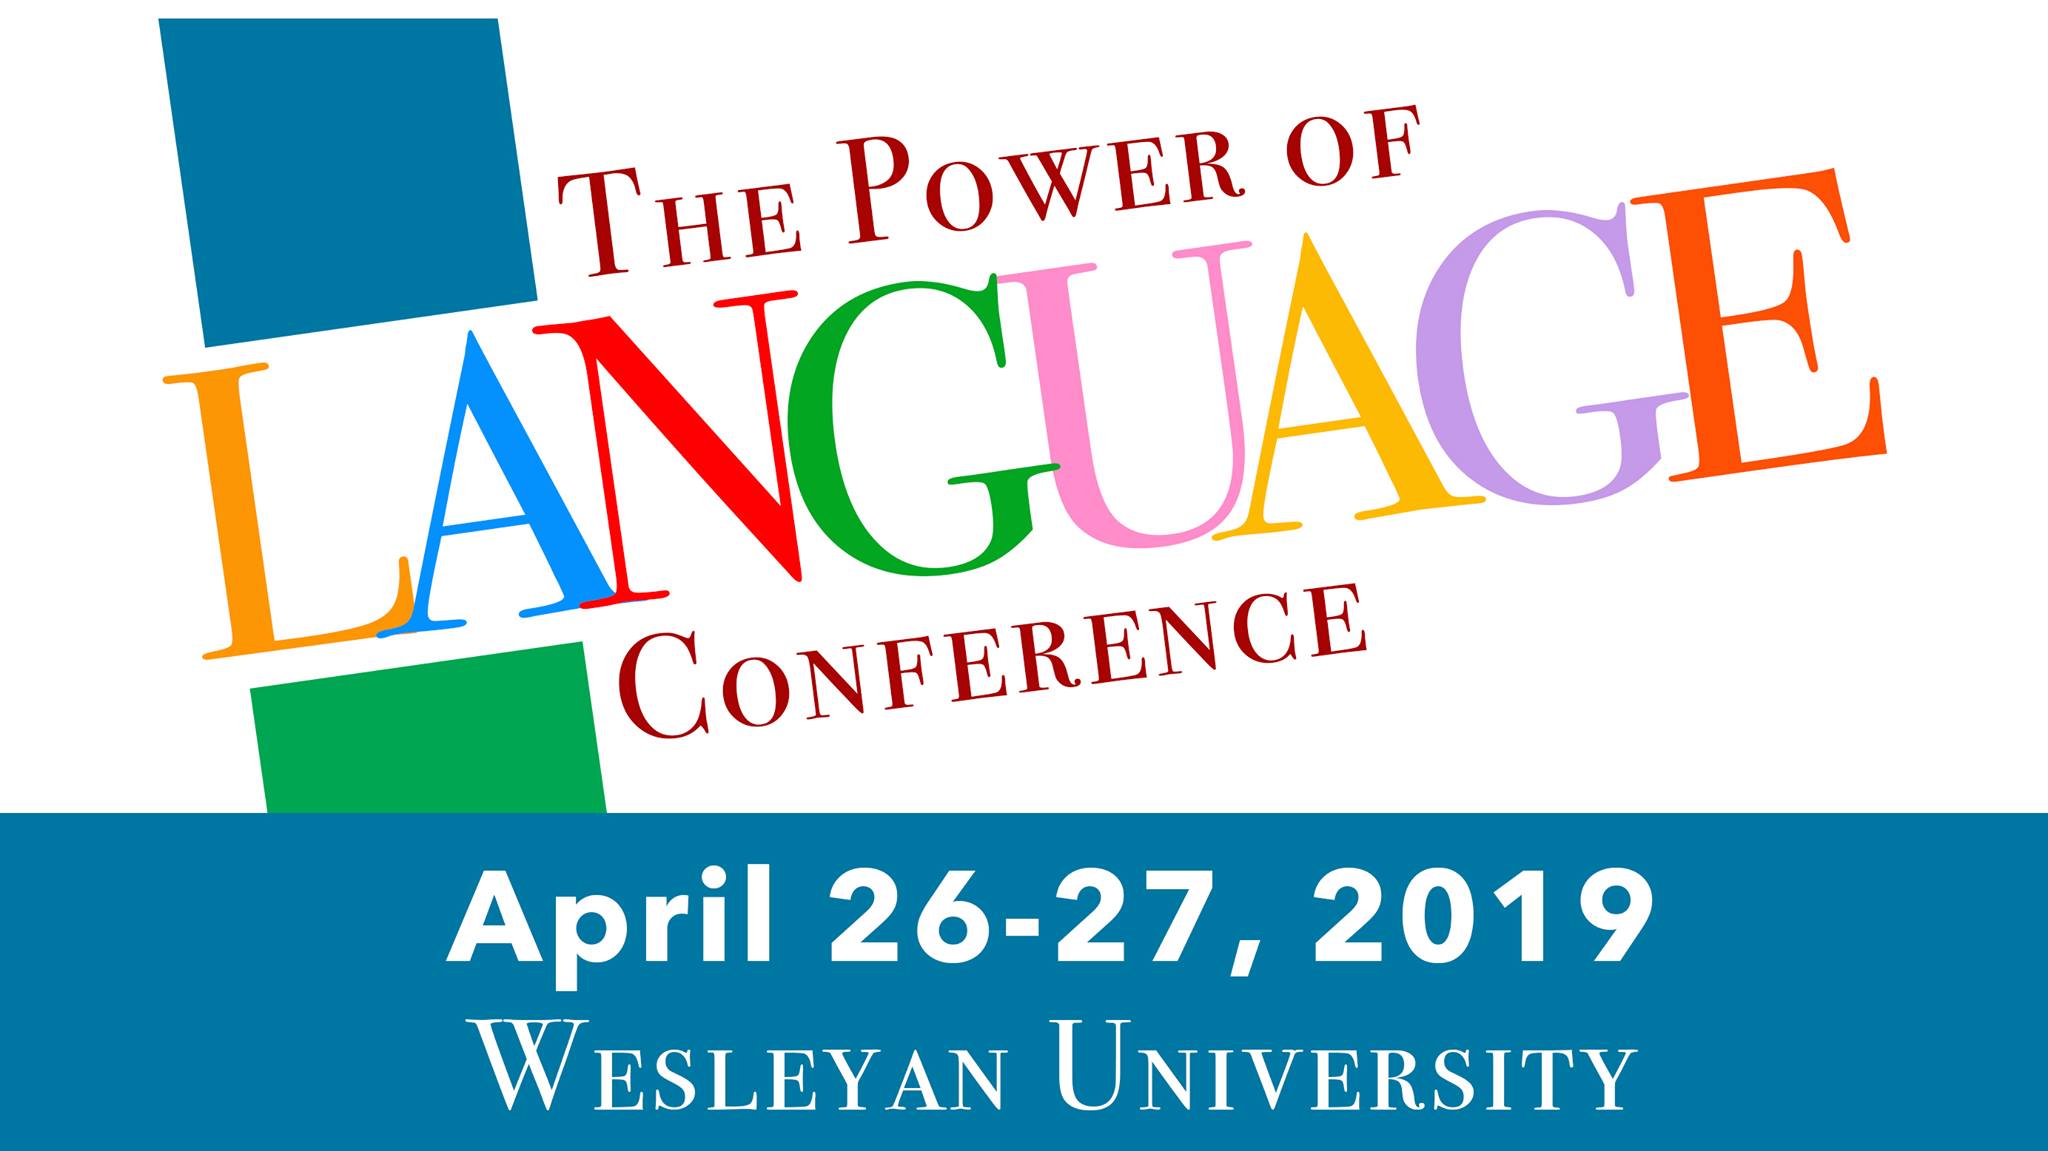 c/o facebook.com/Power of Language Conference